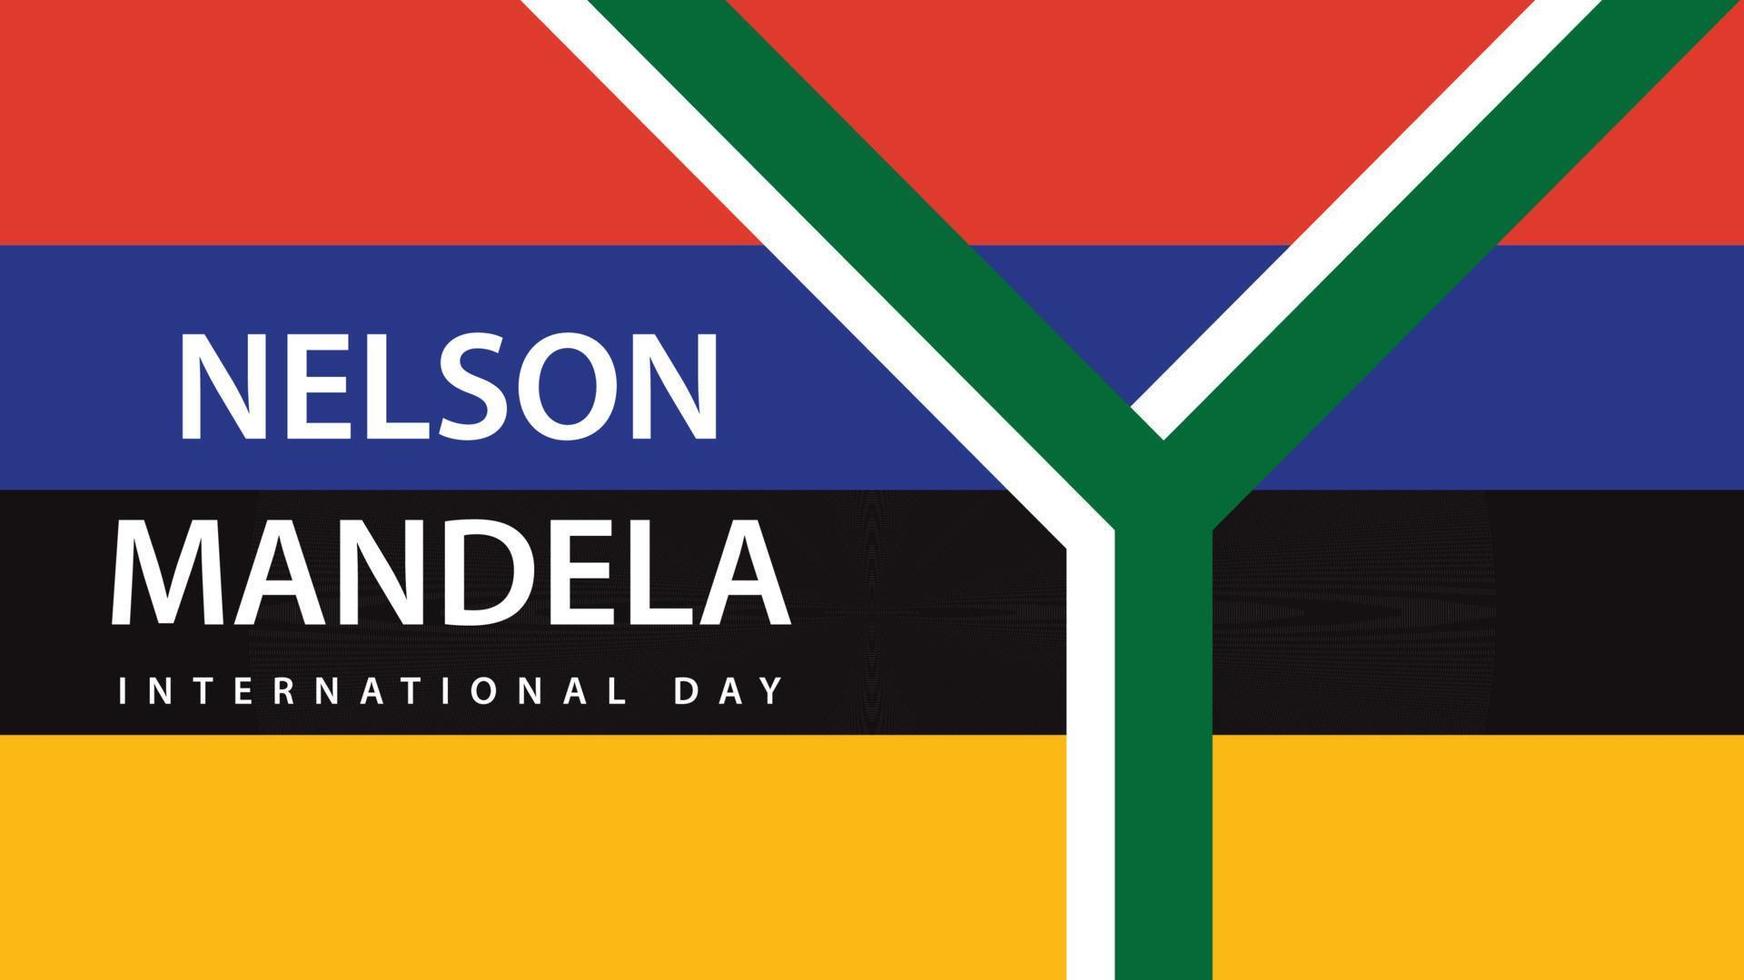 Nelson Mandela International Day. Vector illustration.